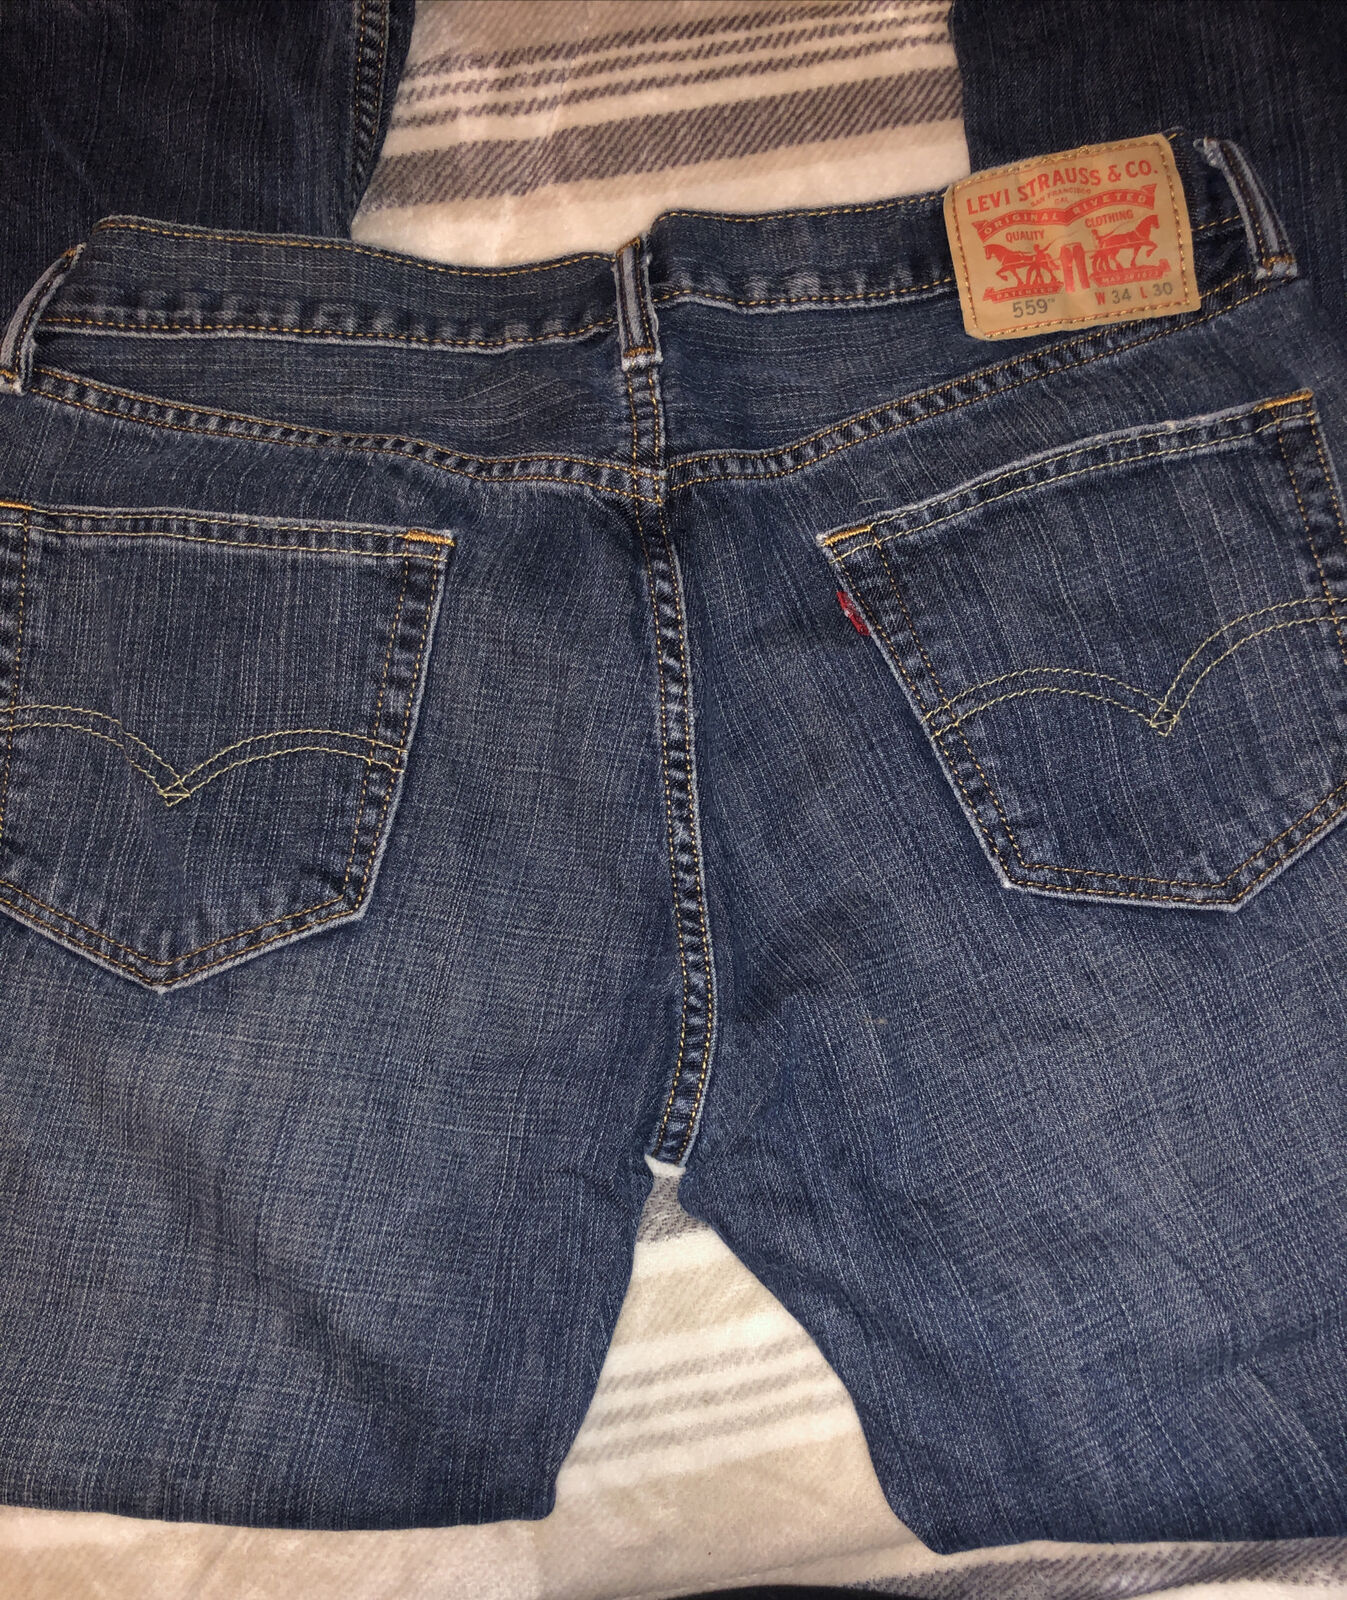 Levi Strauss Co Denim Blue Jeans 559 Waist 34 Len… - image 8